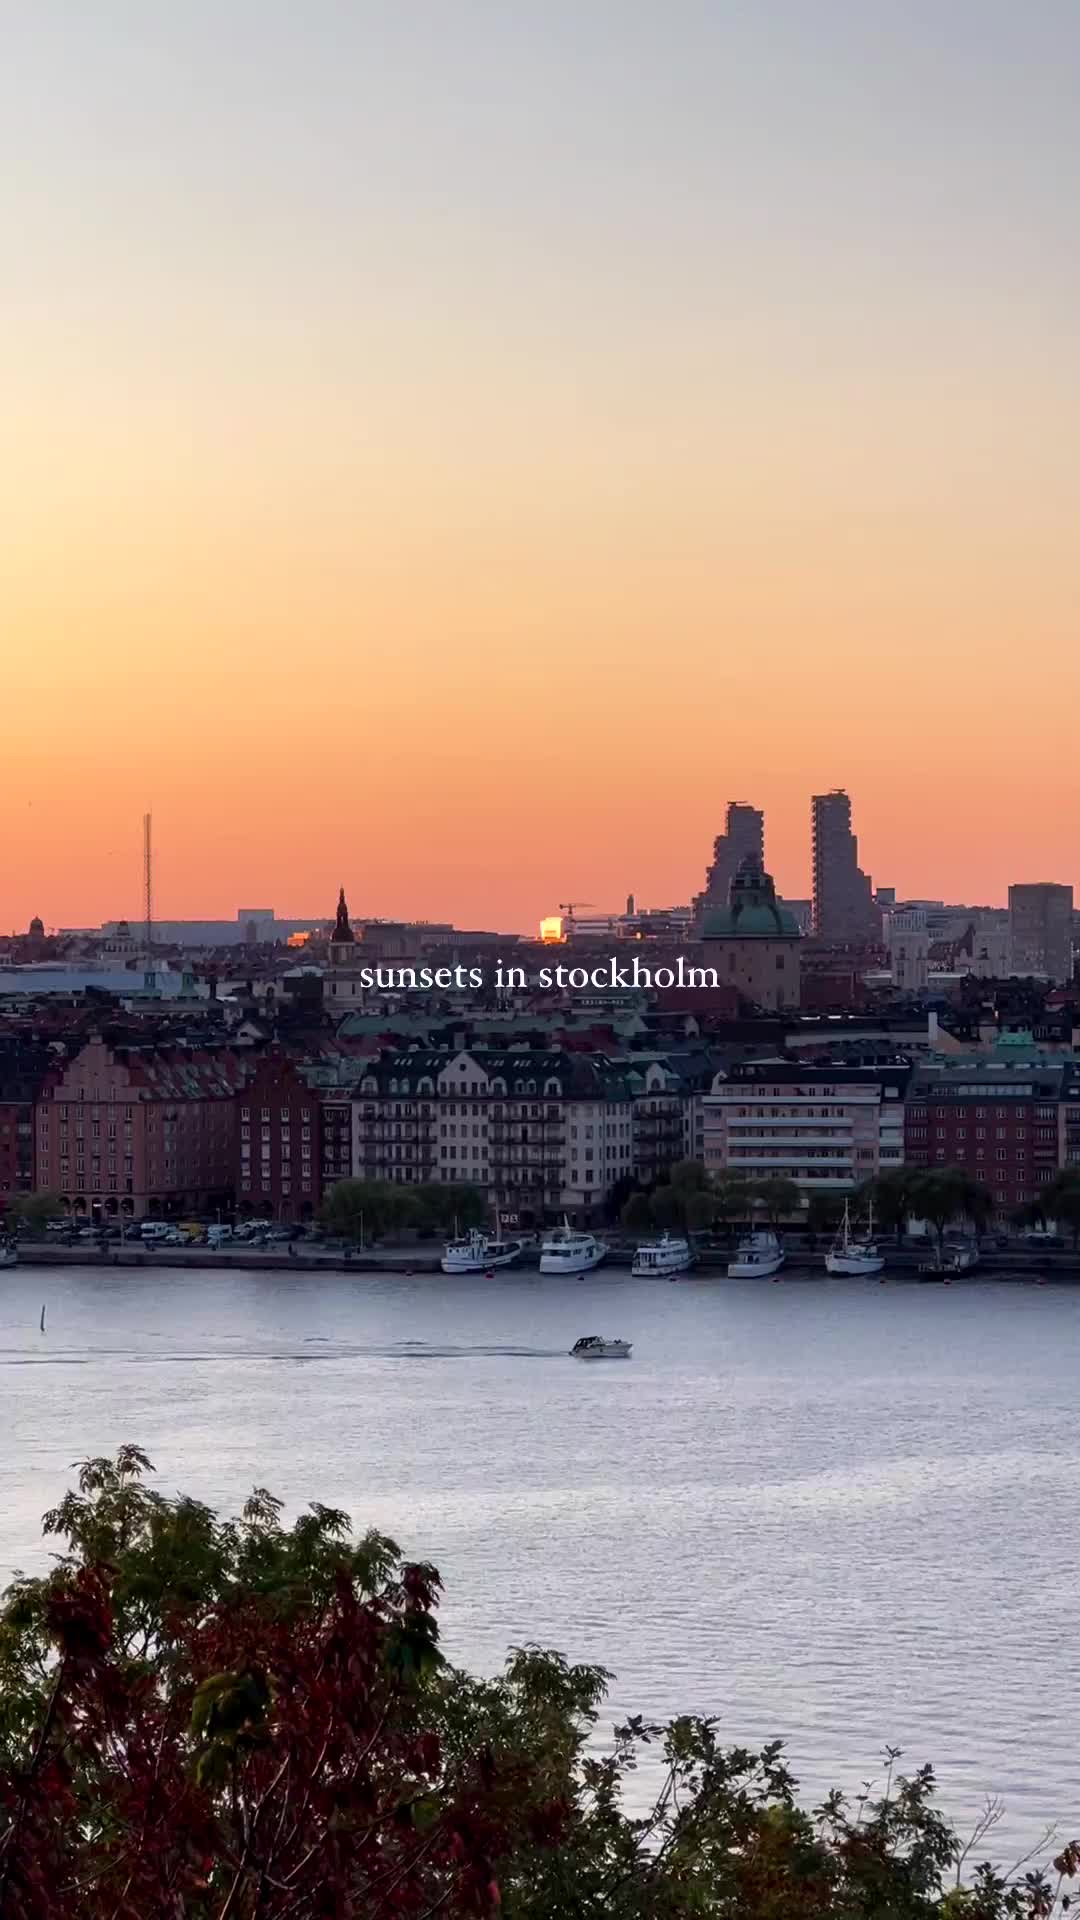 Stunning Sunset Views at Skinnarviksberget, Stockholm